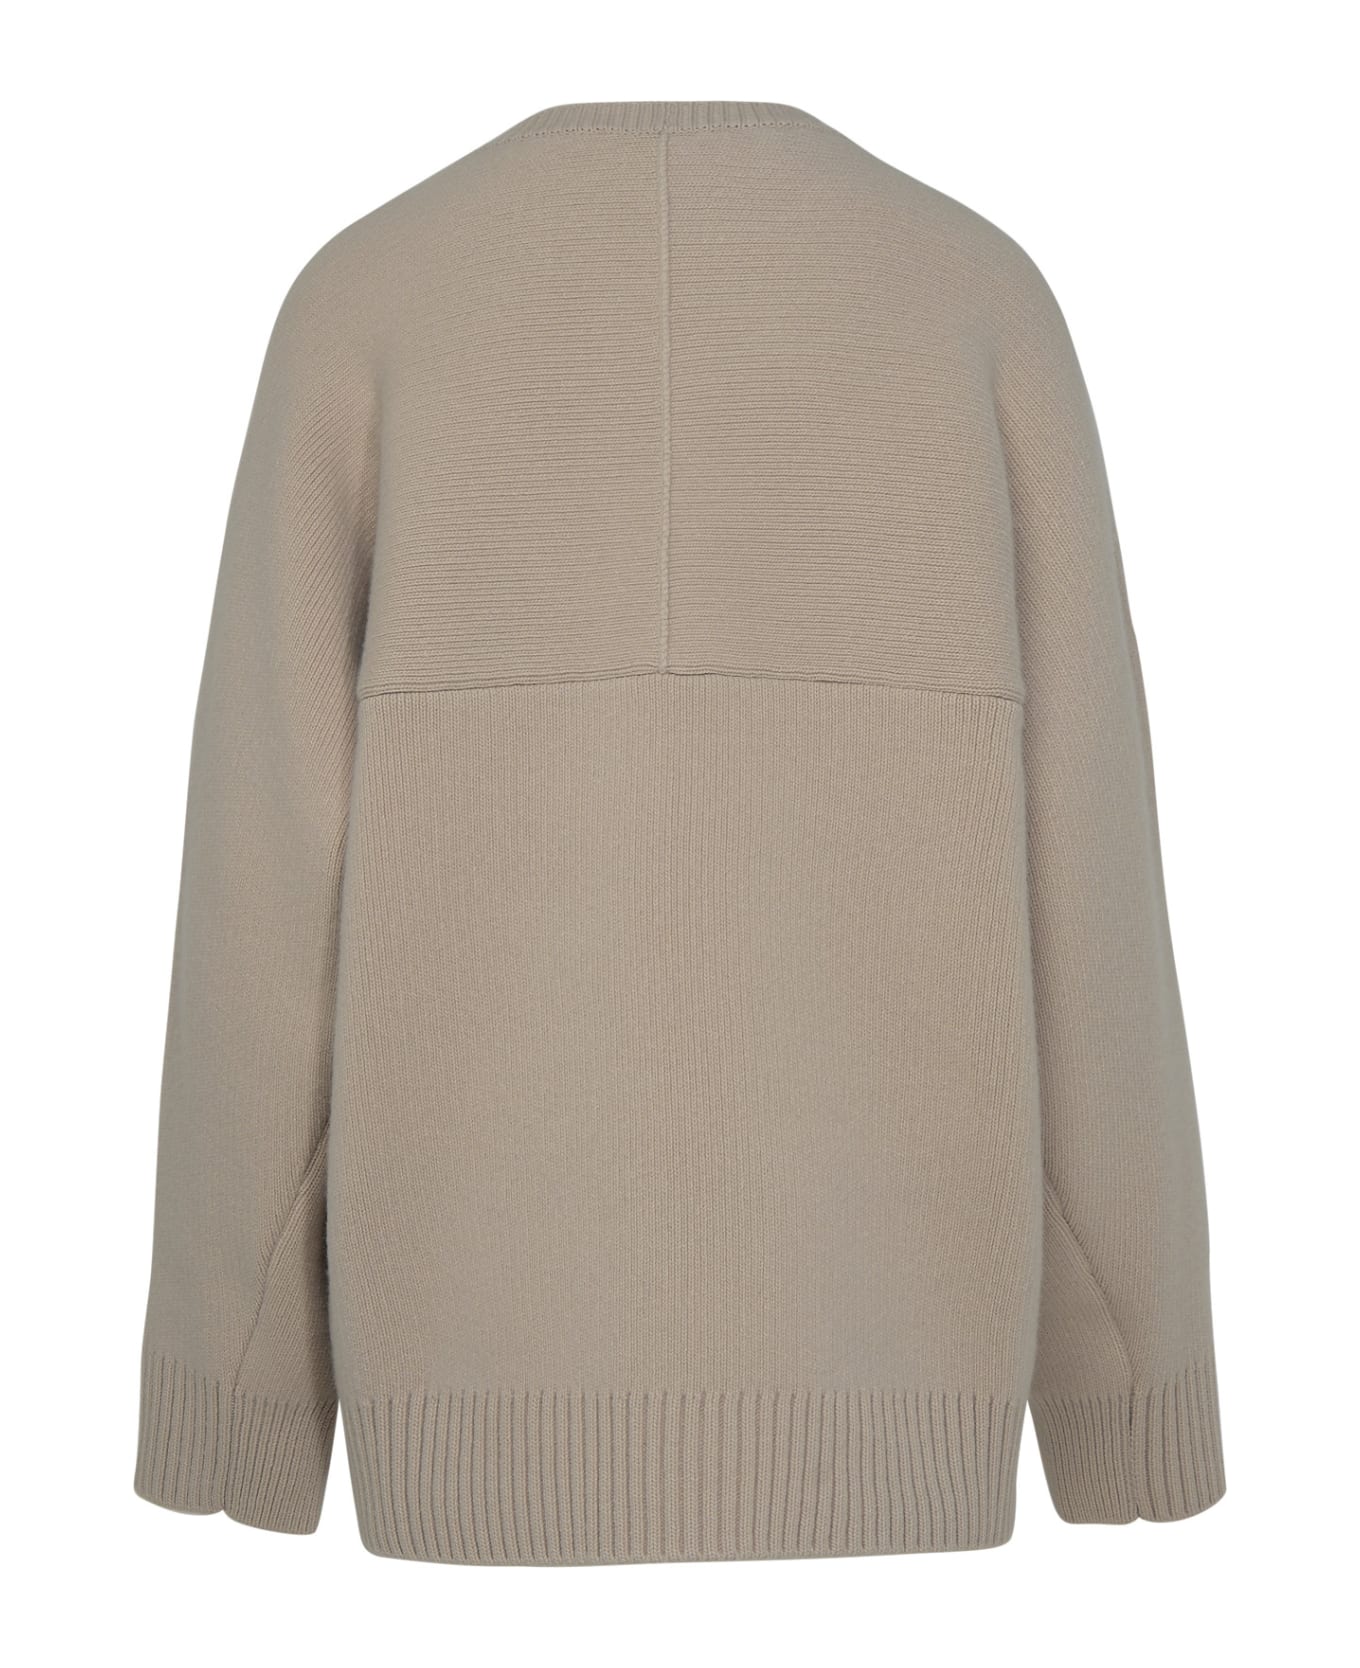 Lanvin Black Cashmere Blend Sweater - Beige